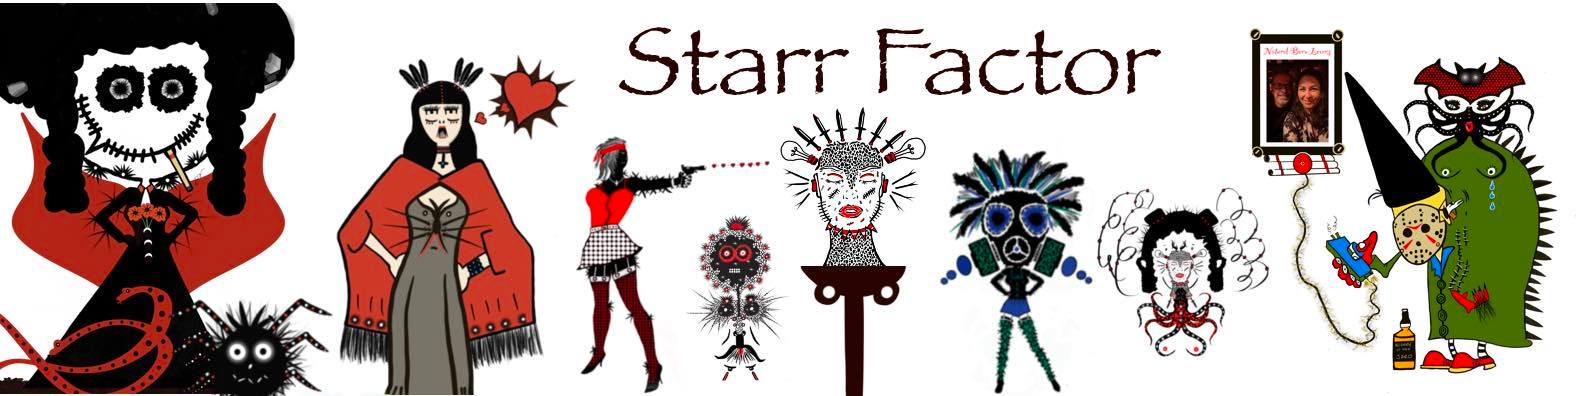 StarrFactor_ banner